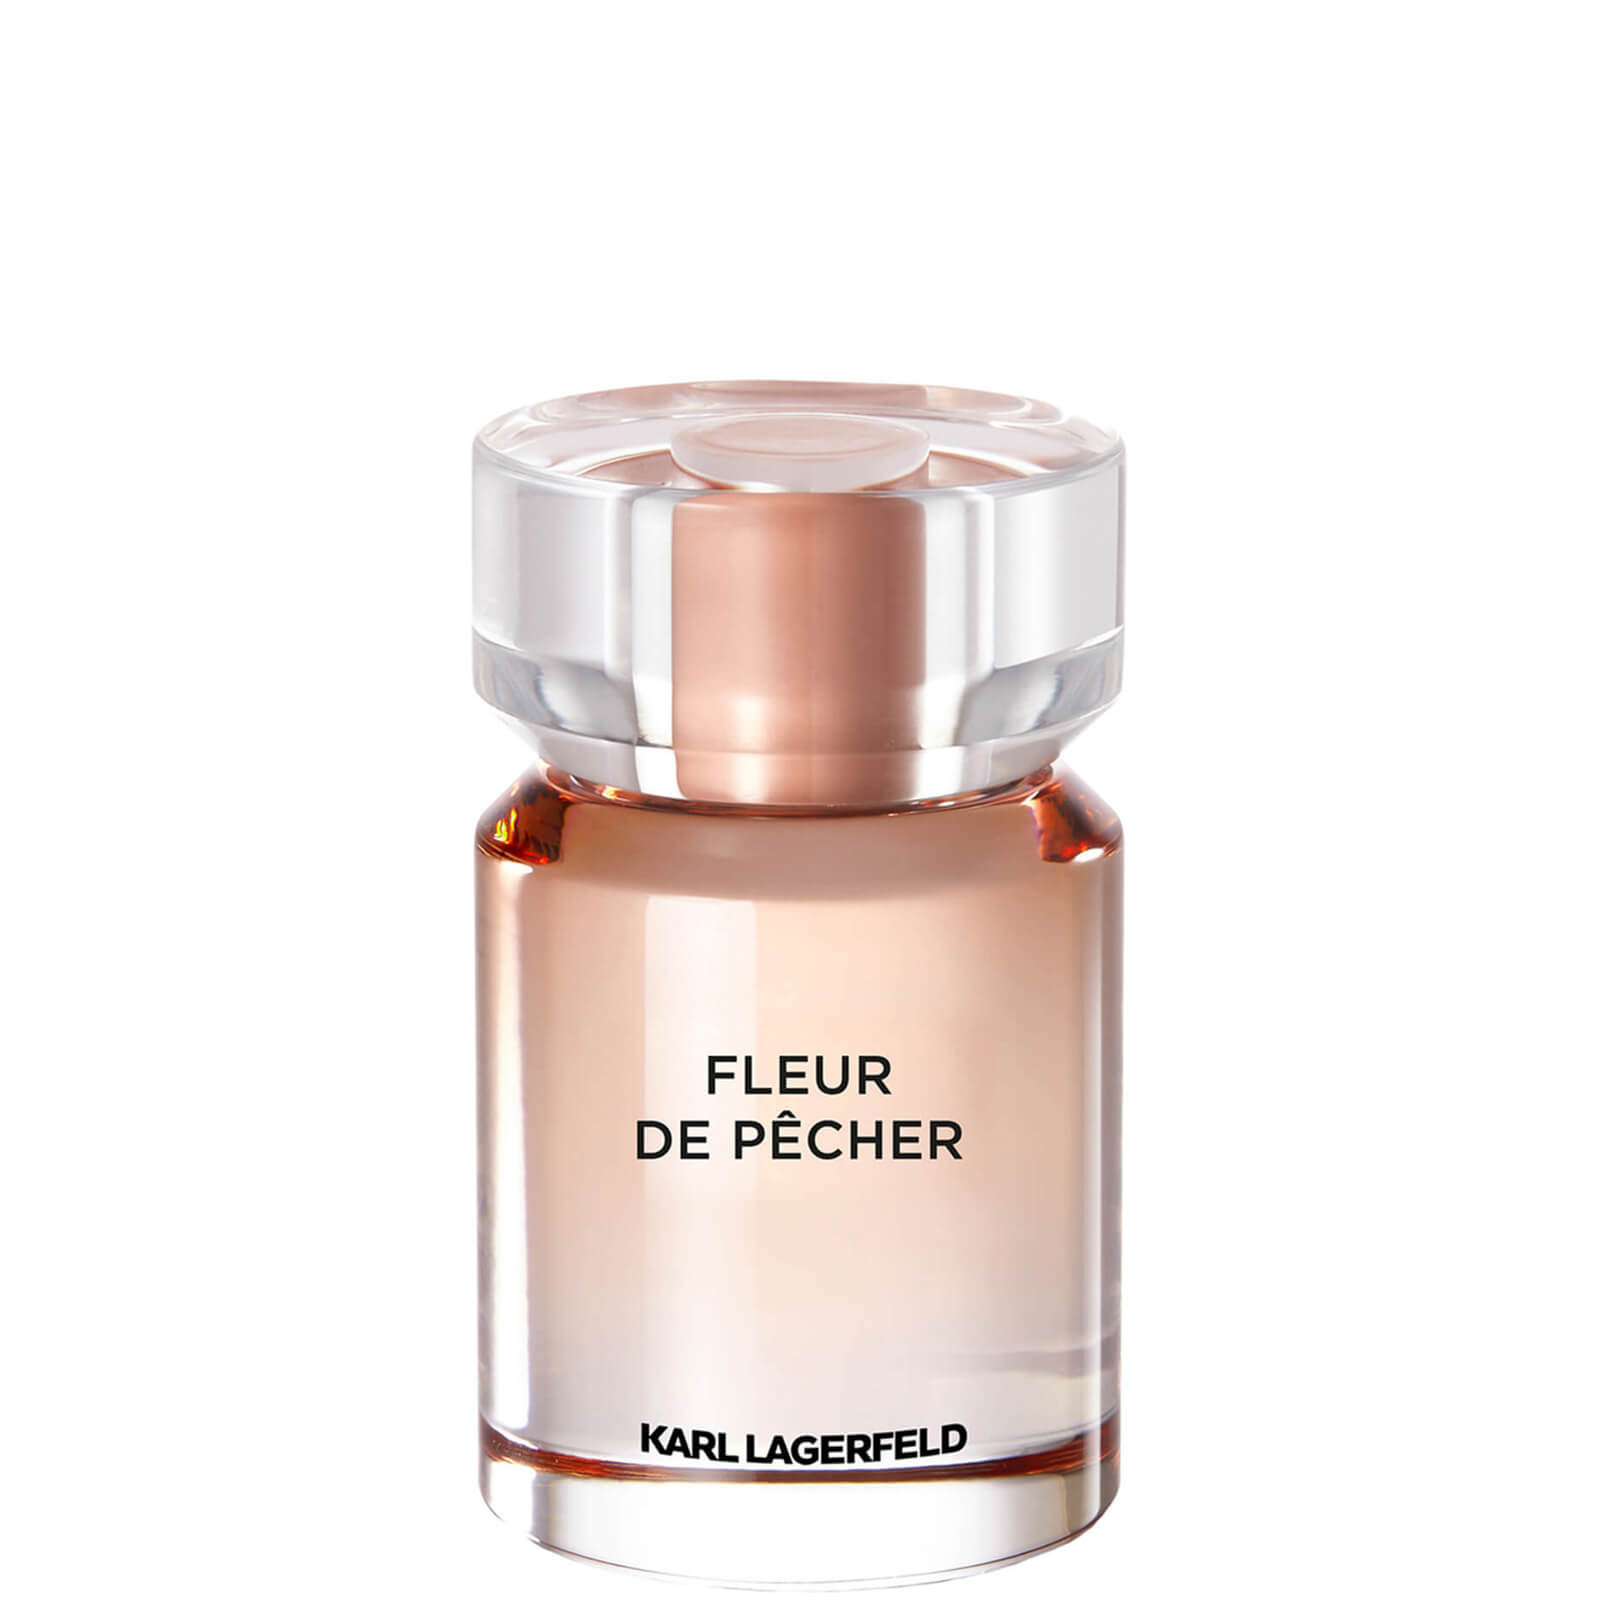 Karl Lagerfeld Fleur de Pecher Eau de Parfum 50ml